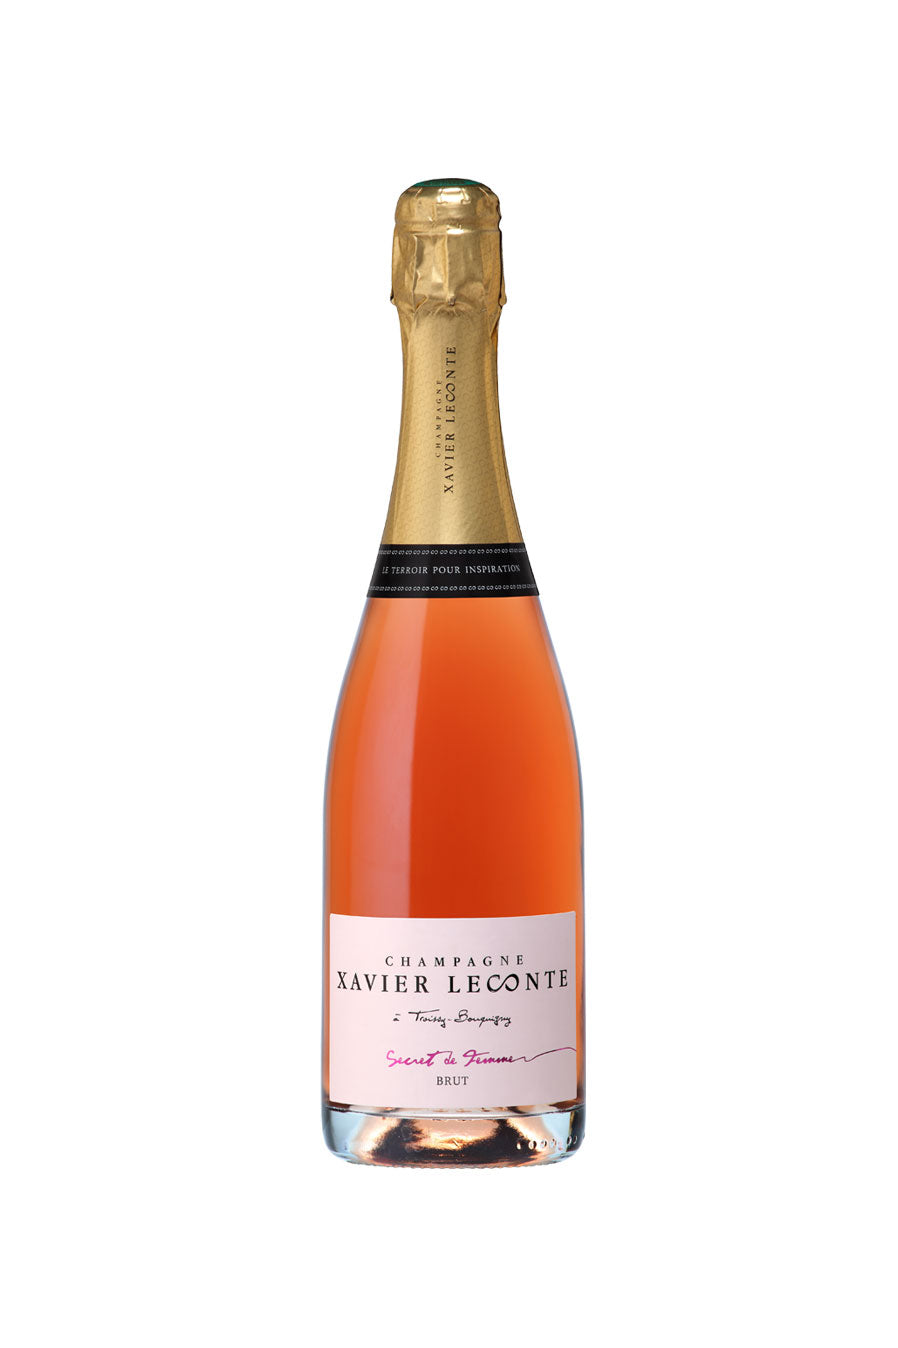 Poisson – Stahel champagnes